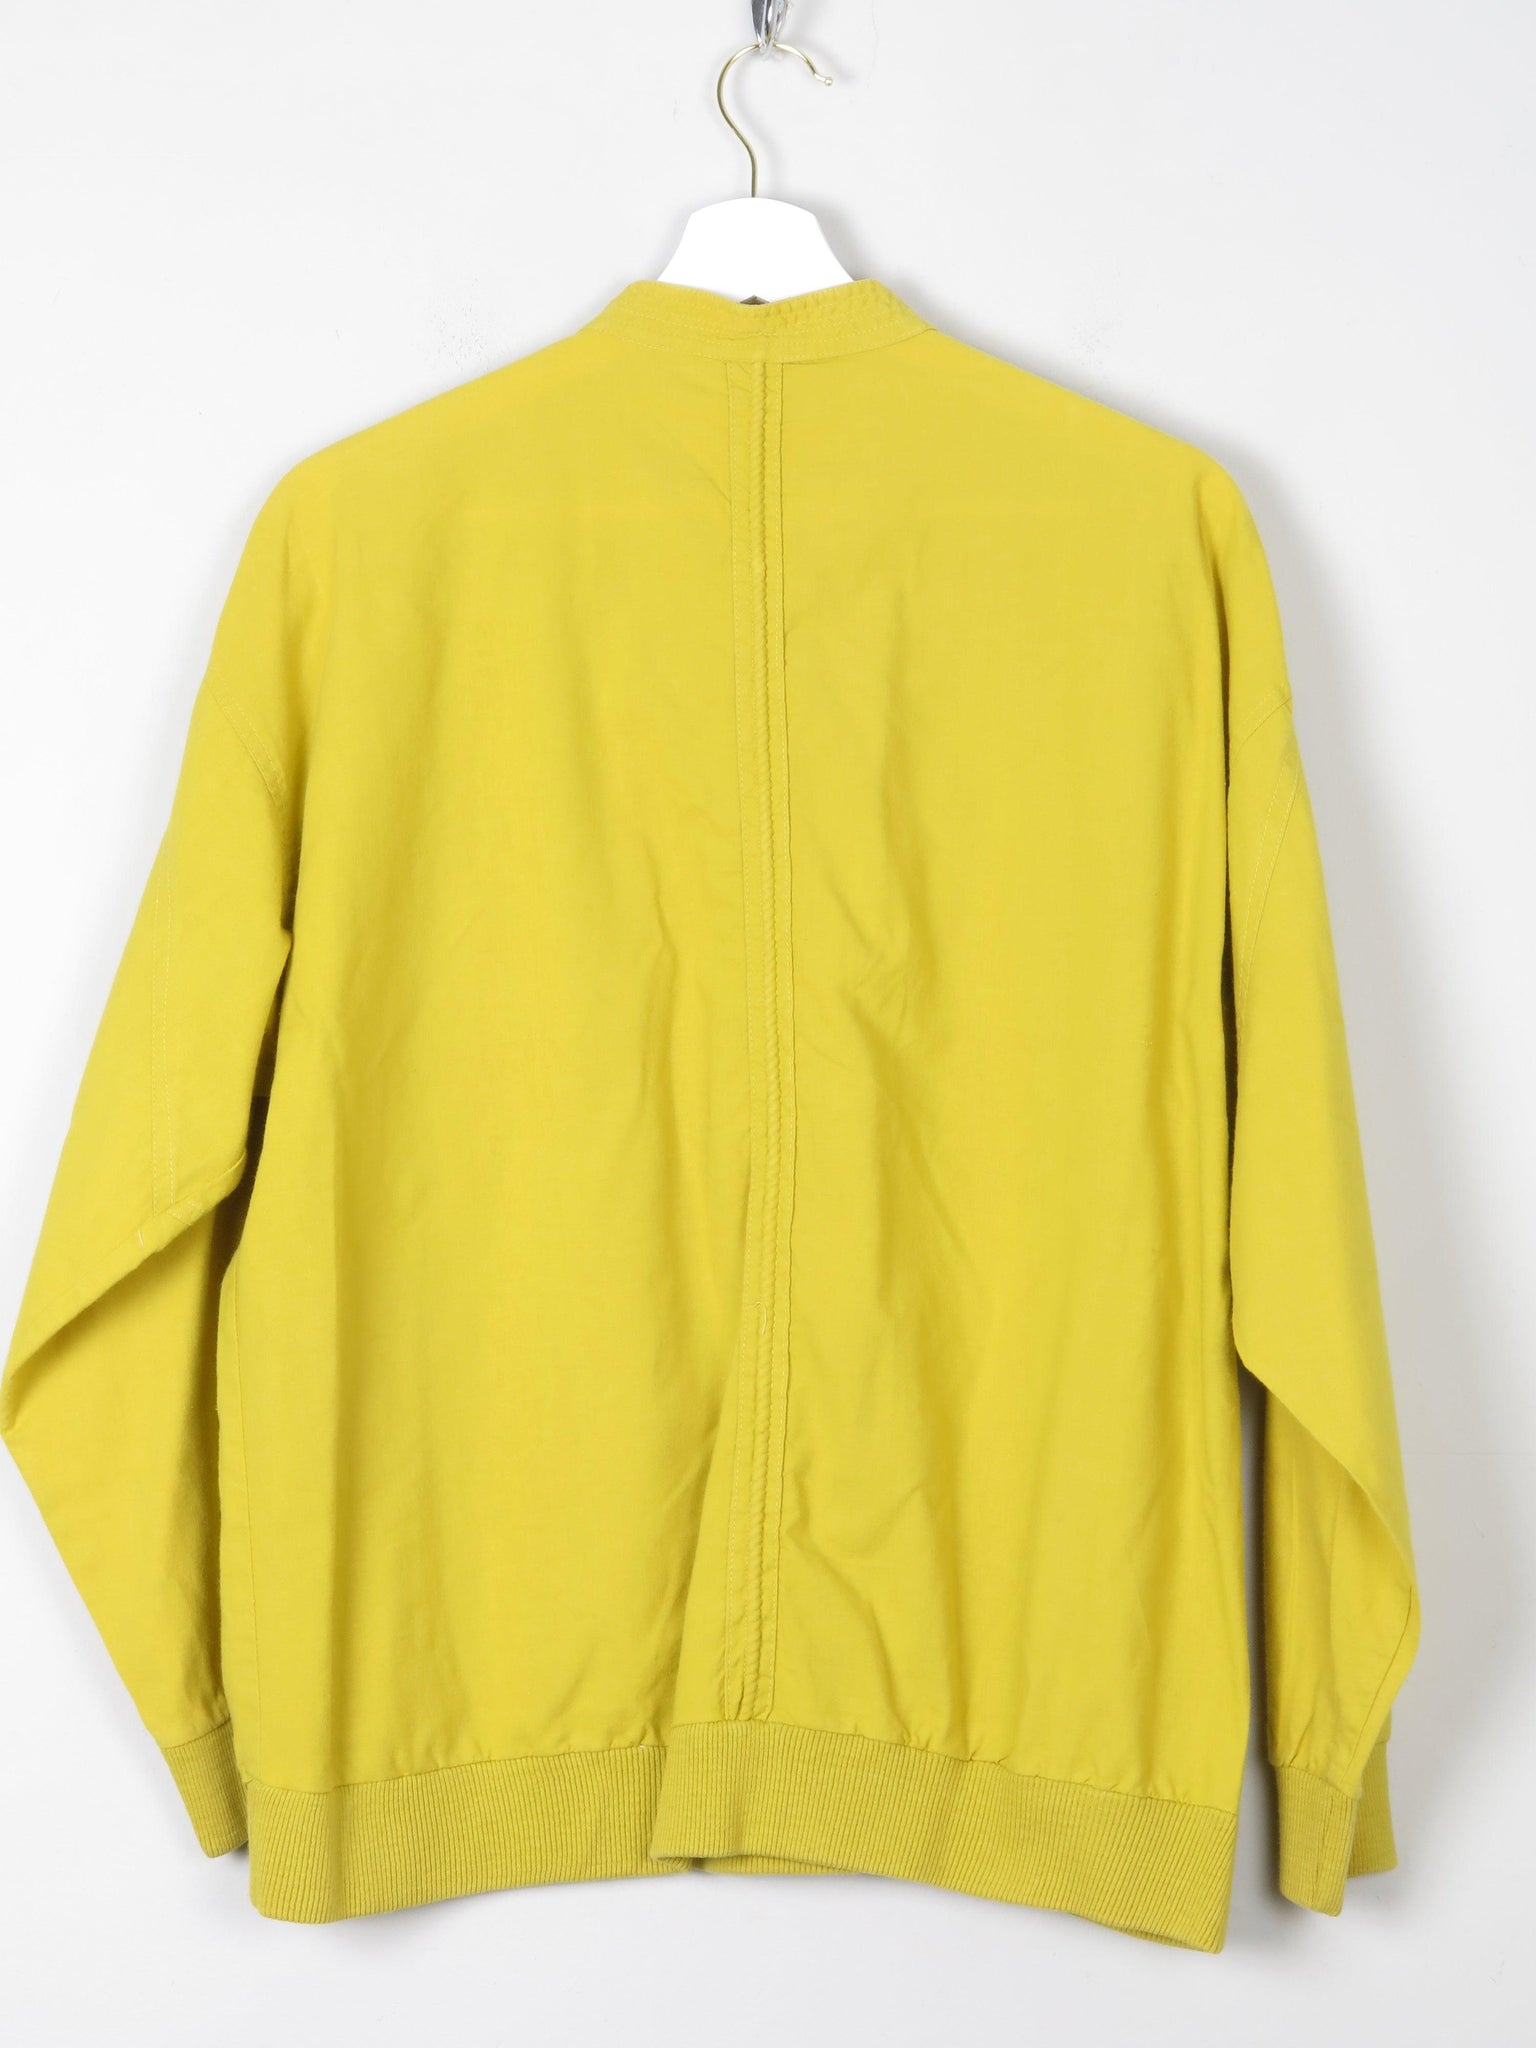 Women's Yellow/ Mustard 1980s Collarless Blouse/Jacket S - The Harlequin